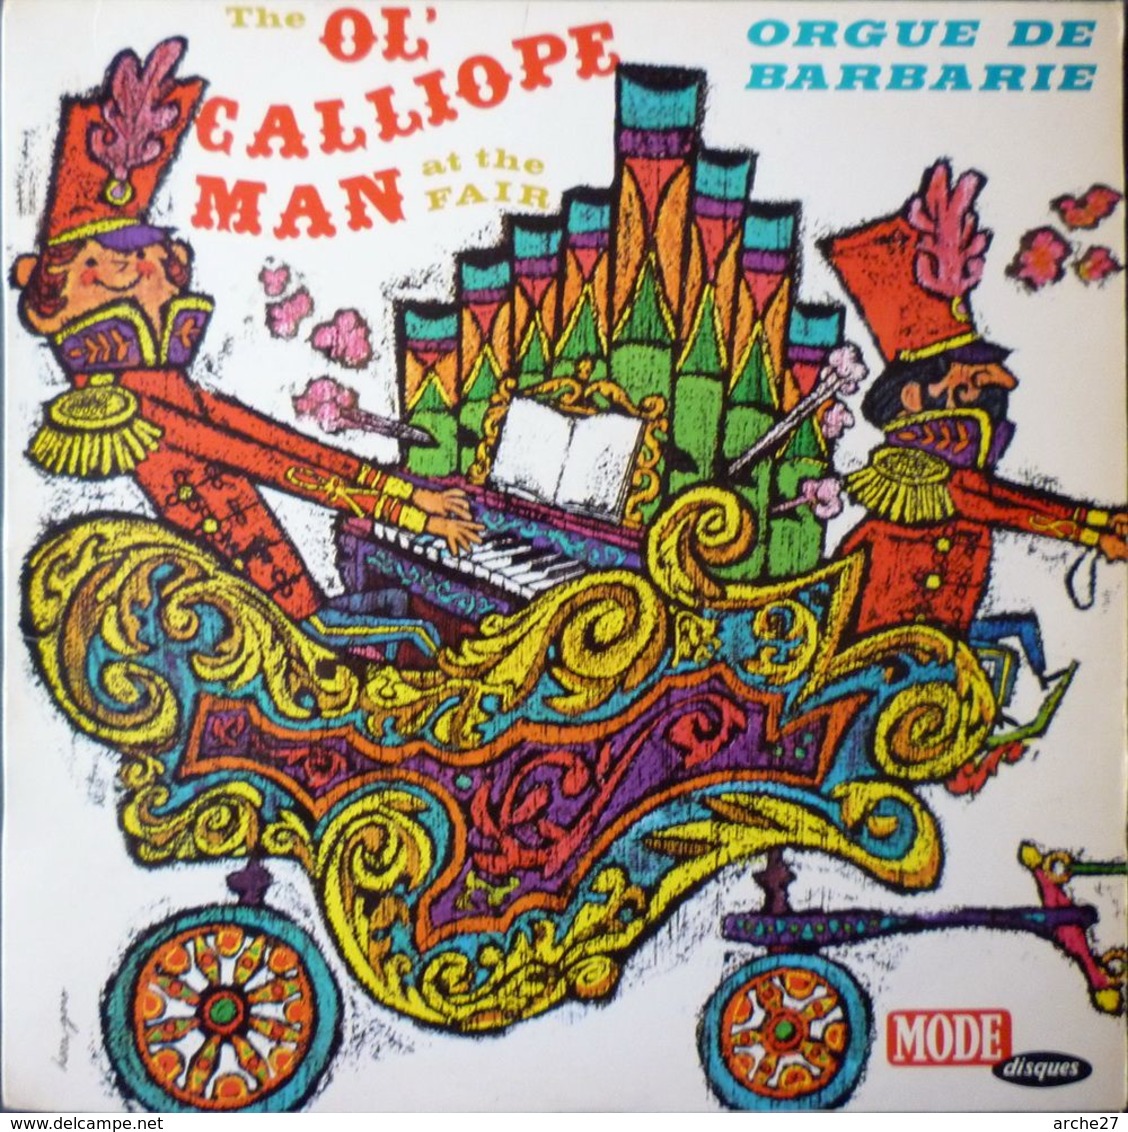 ORGUE DE BARBARIE - LP - 33T - Disque Vinyle - Ol' Galliope Man At The Fair - 9397 - Musicales